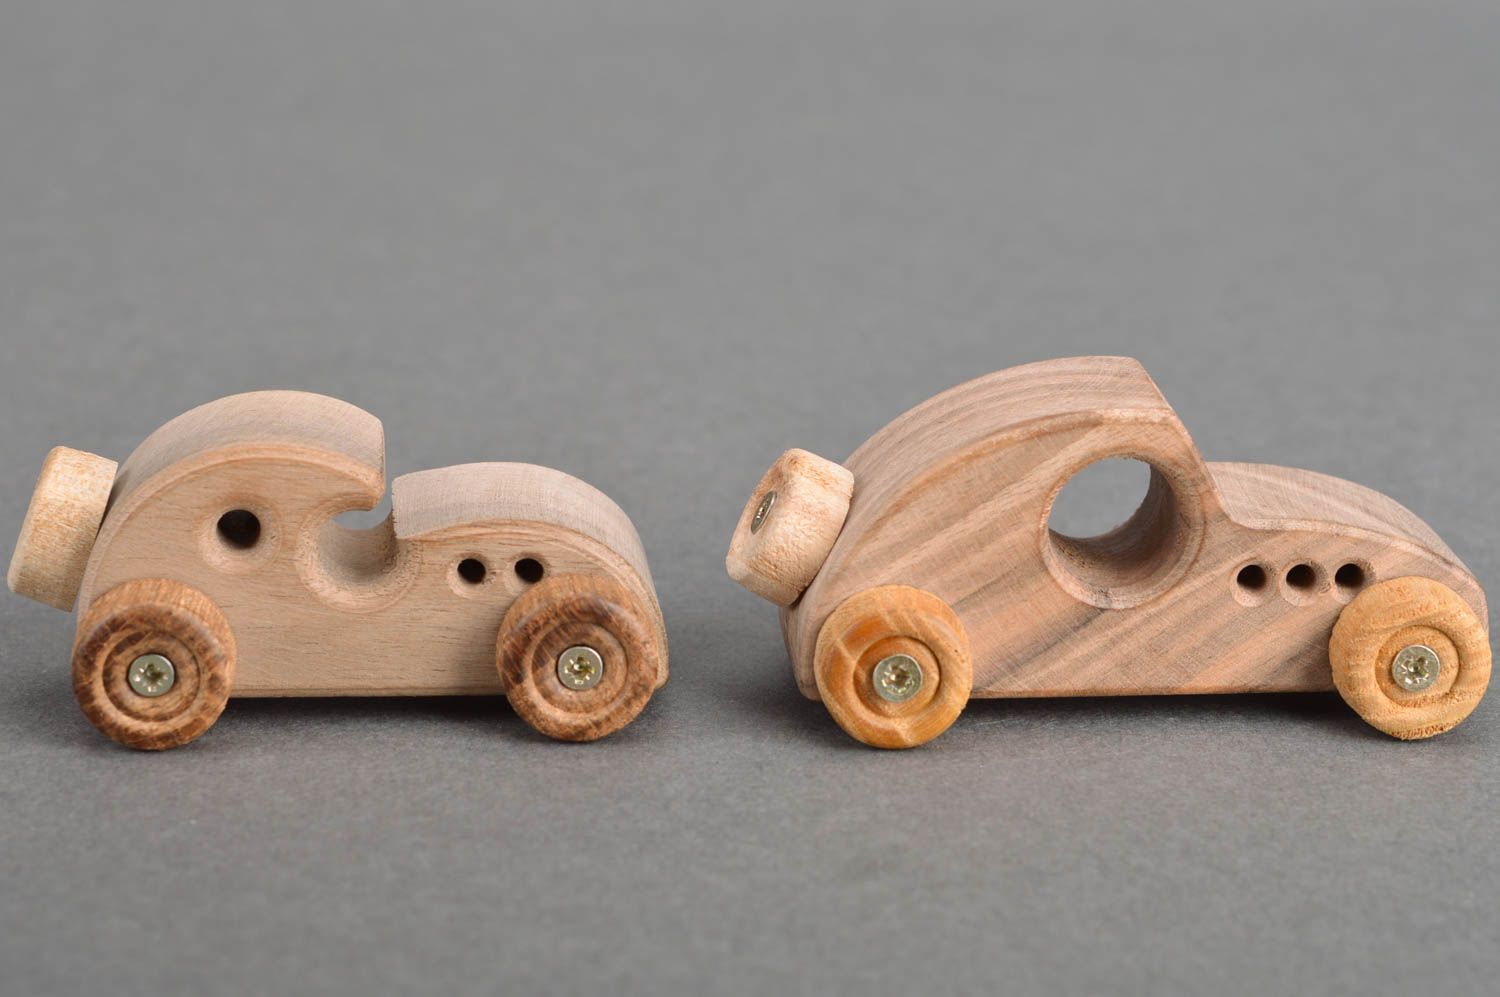 Handmade Wooden Toy Car - Eco Car